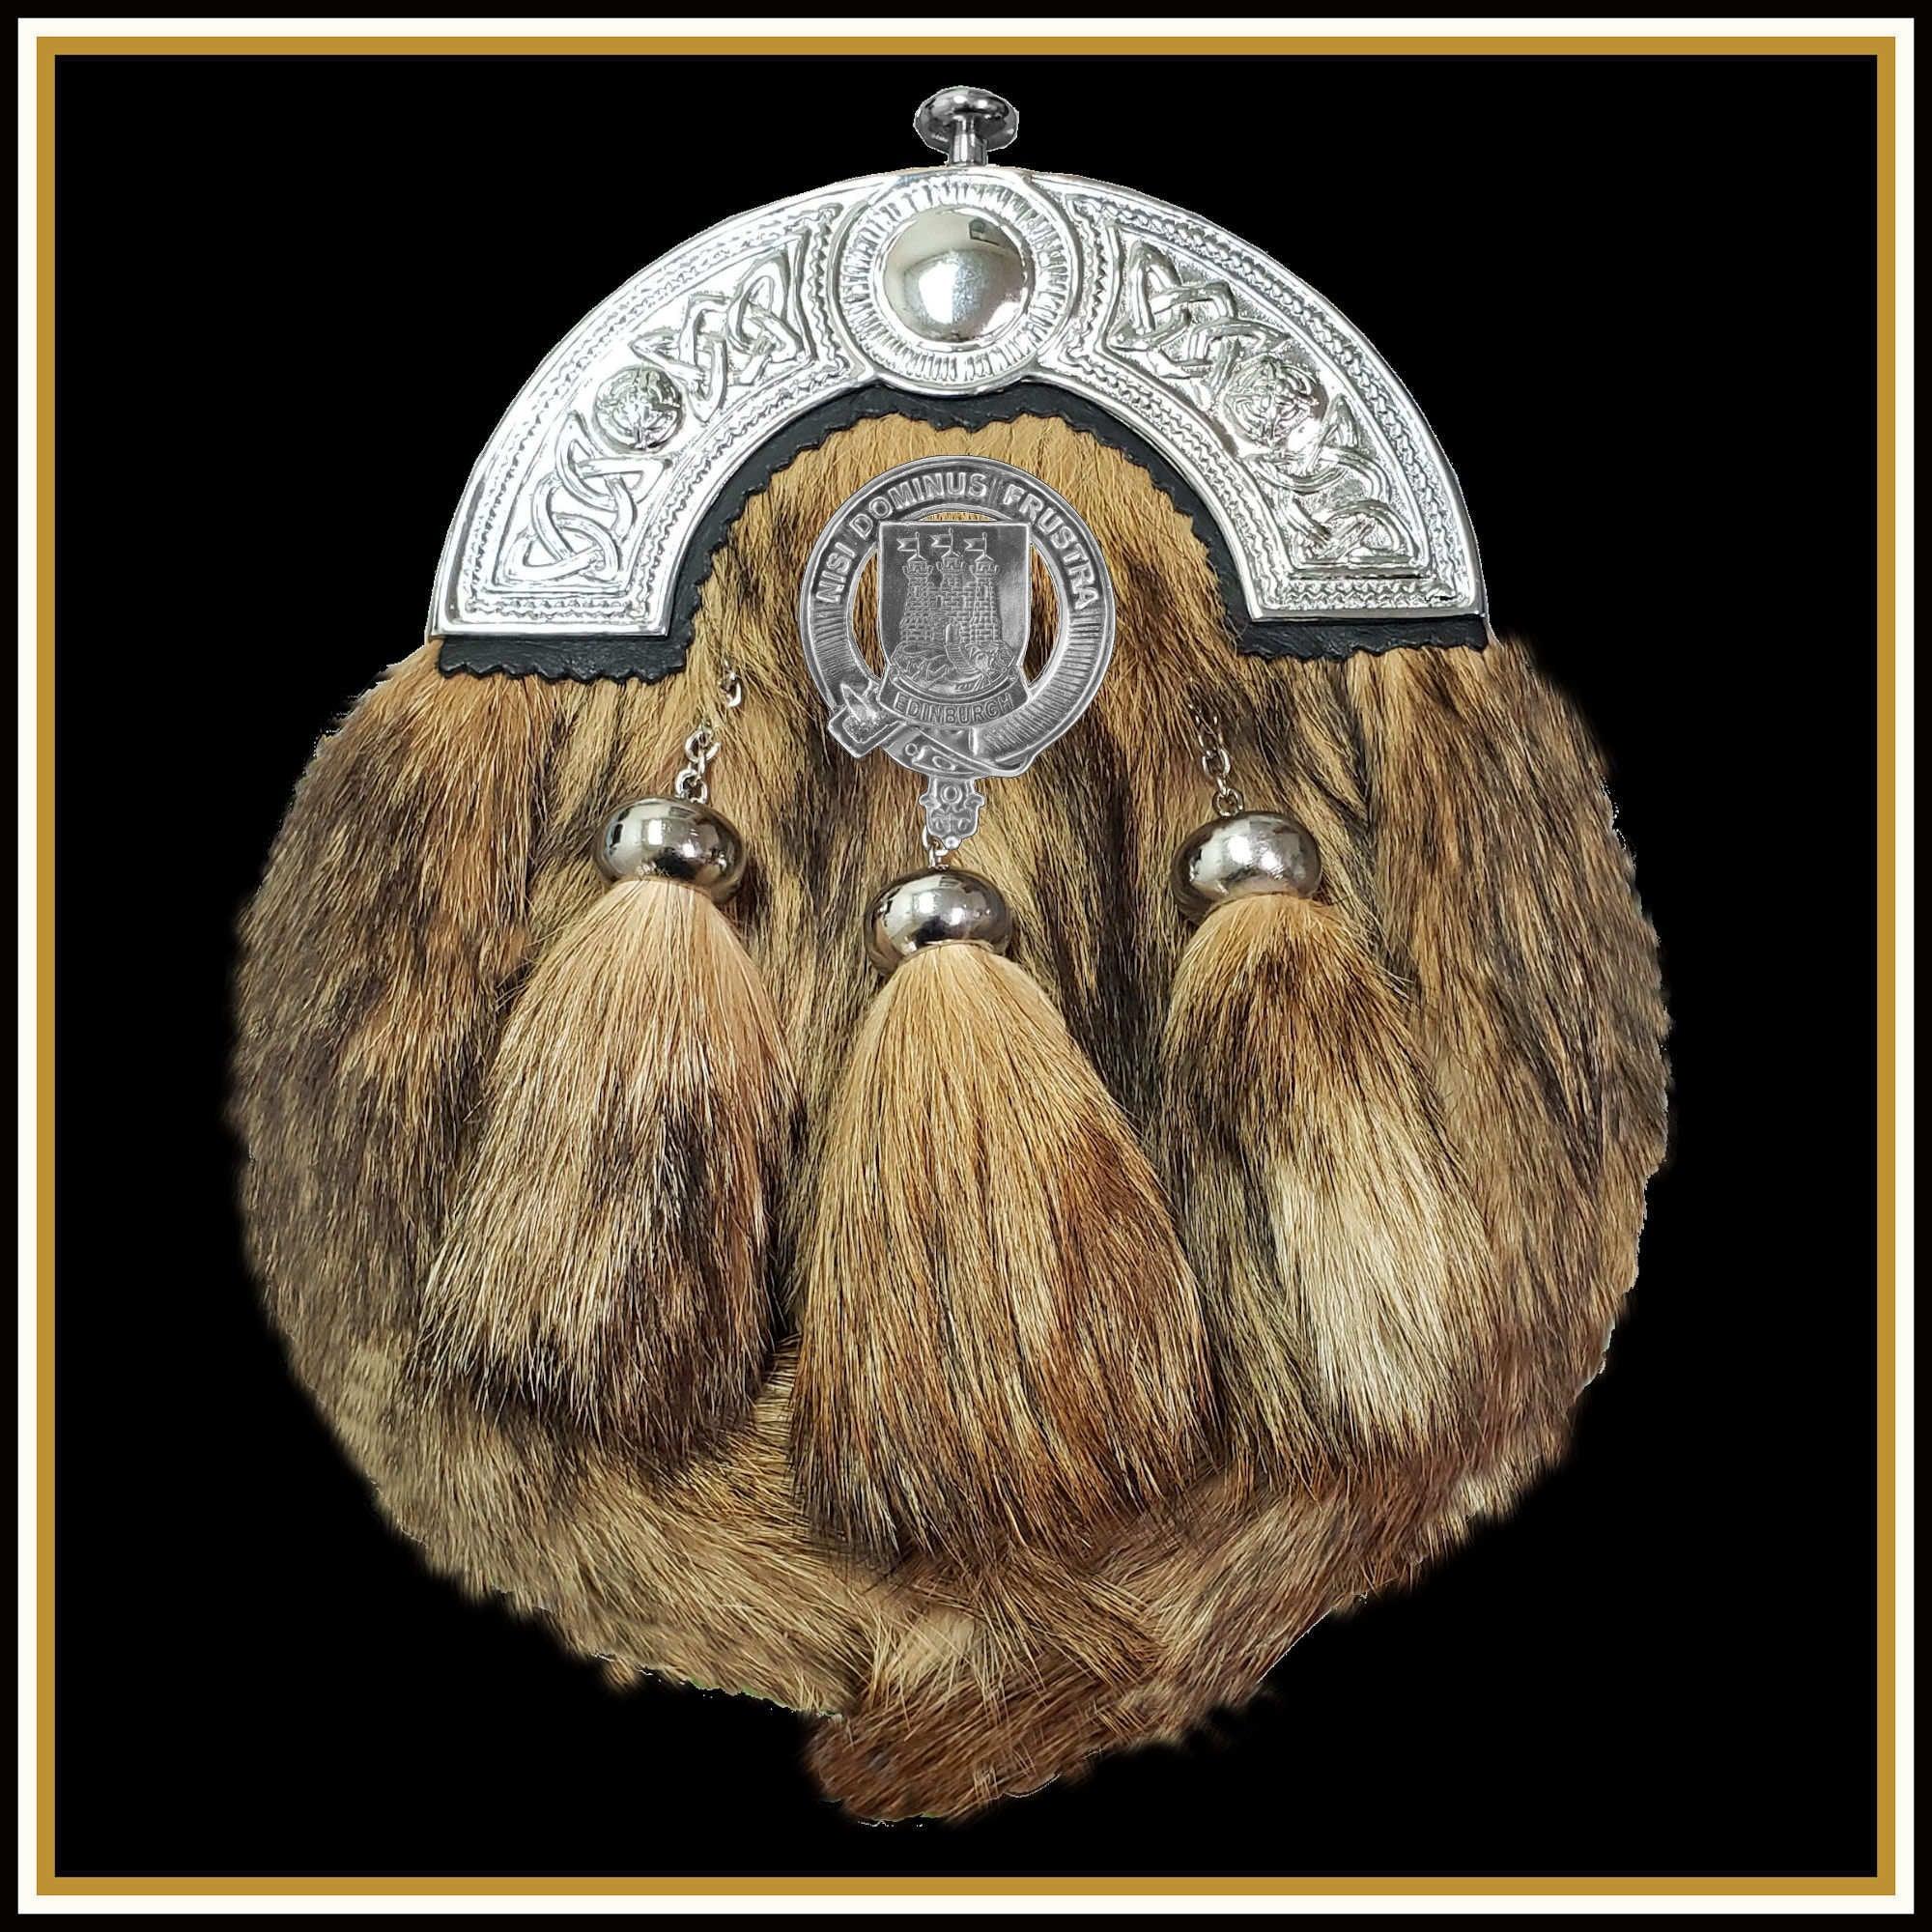 Scottish City of Edinburgh Rampant Crest Badge Dress Fur Sporran